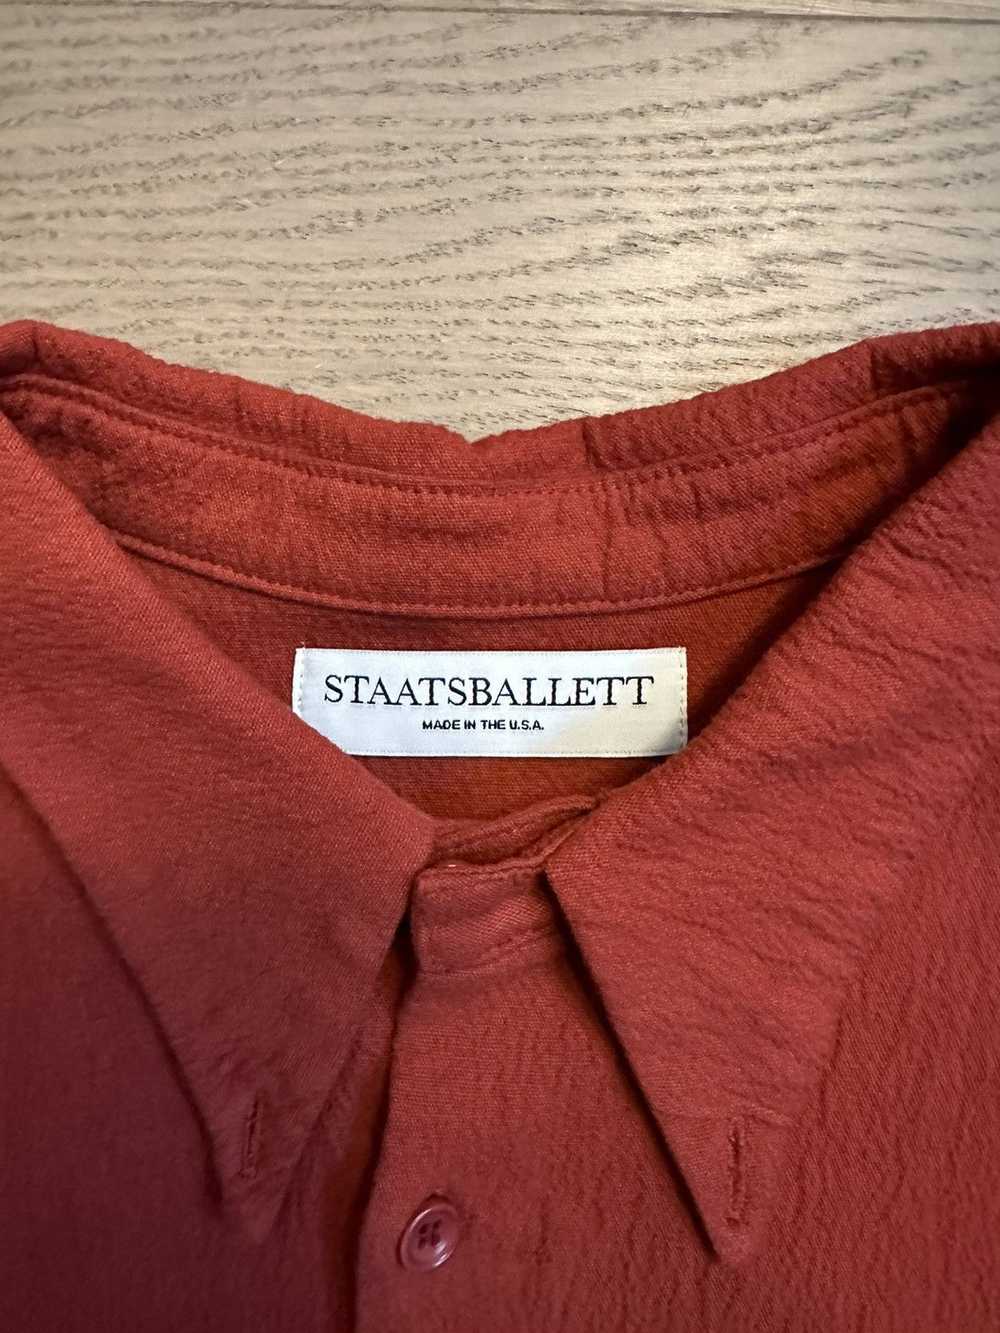 Staatsballett Red Crinkled Cotton Button-Up Shirt - image 3